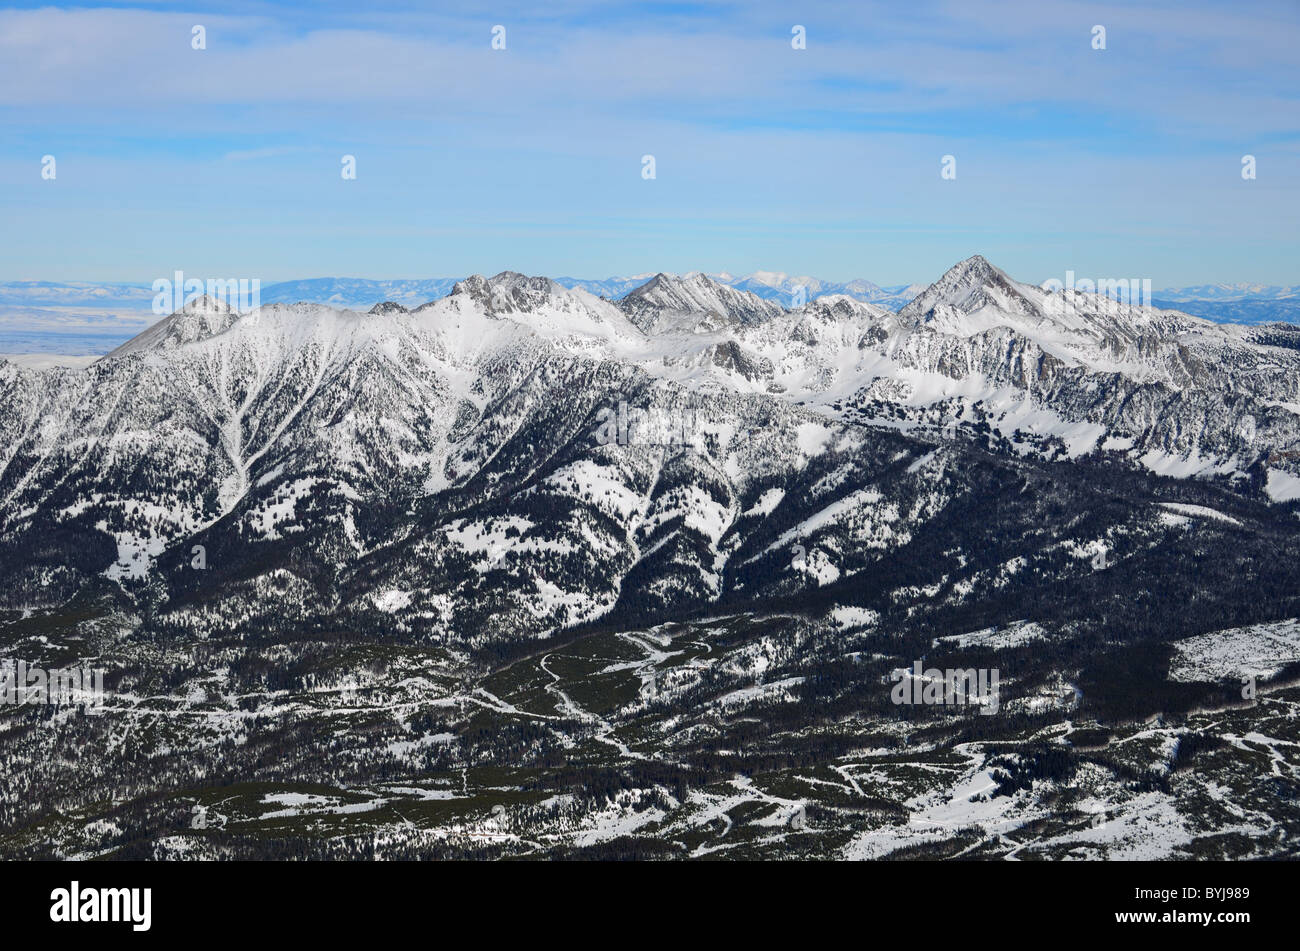 Mountain view from the top of Lone Peak. Big Sky Ski Resort, Montana, USA. Stock Photo